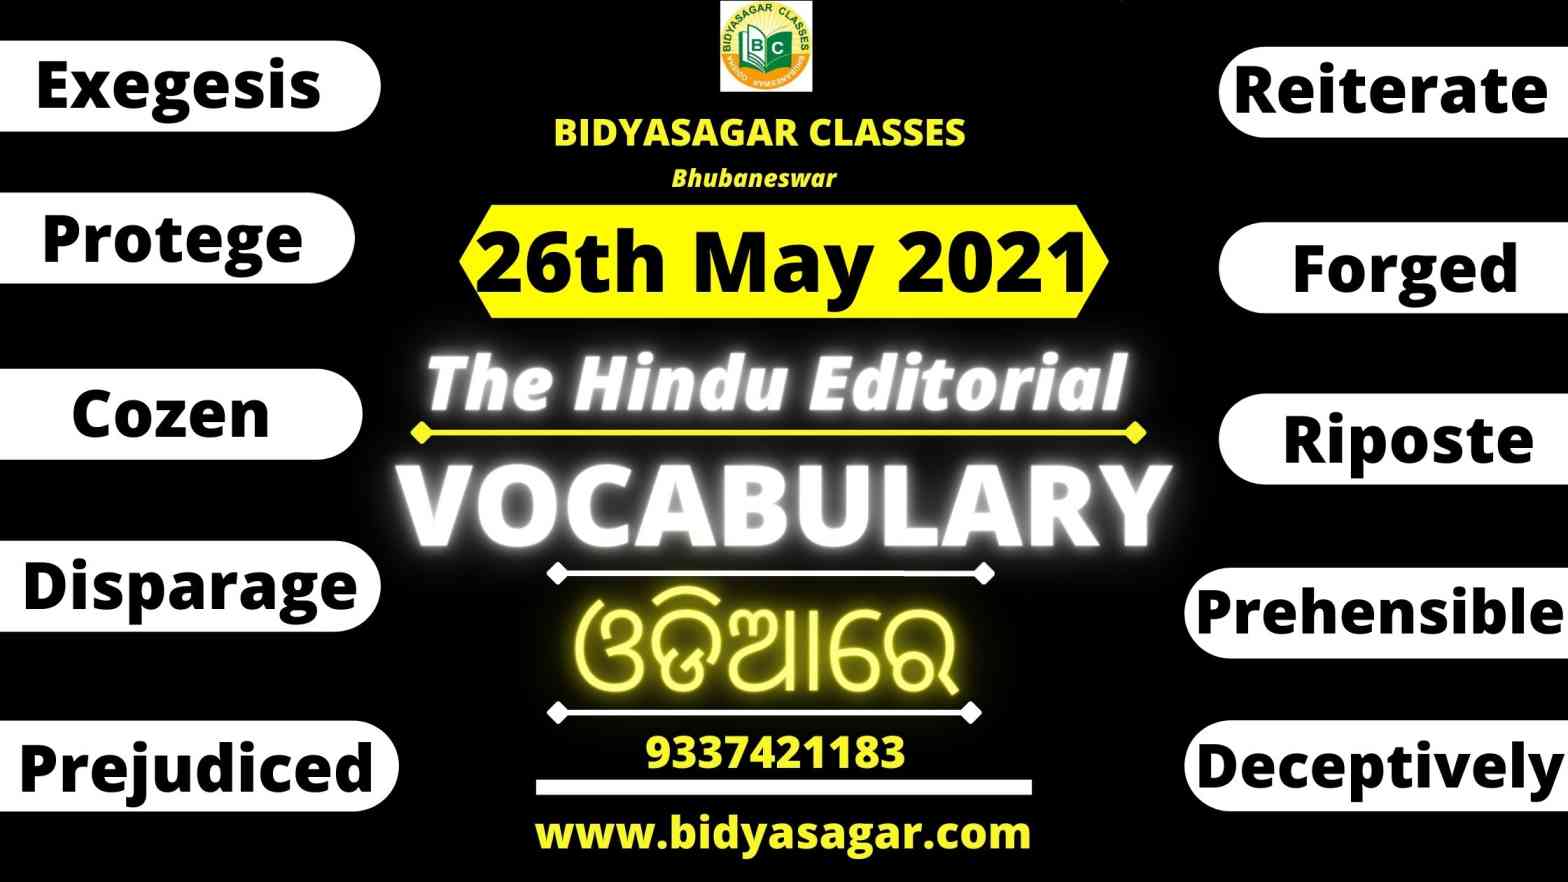 The Hindu Editorial Vocabulary of 26th May 2021